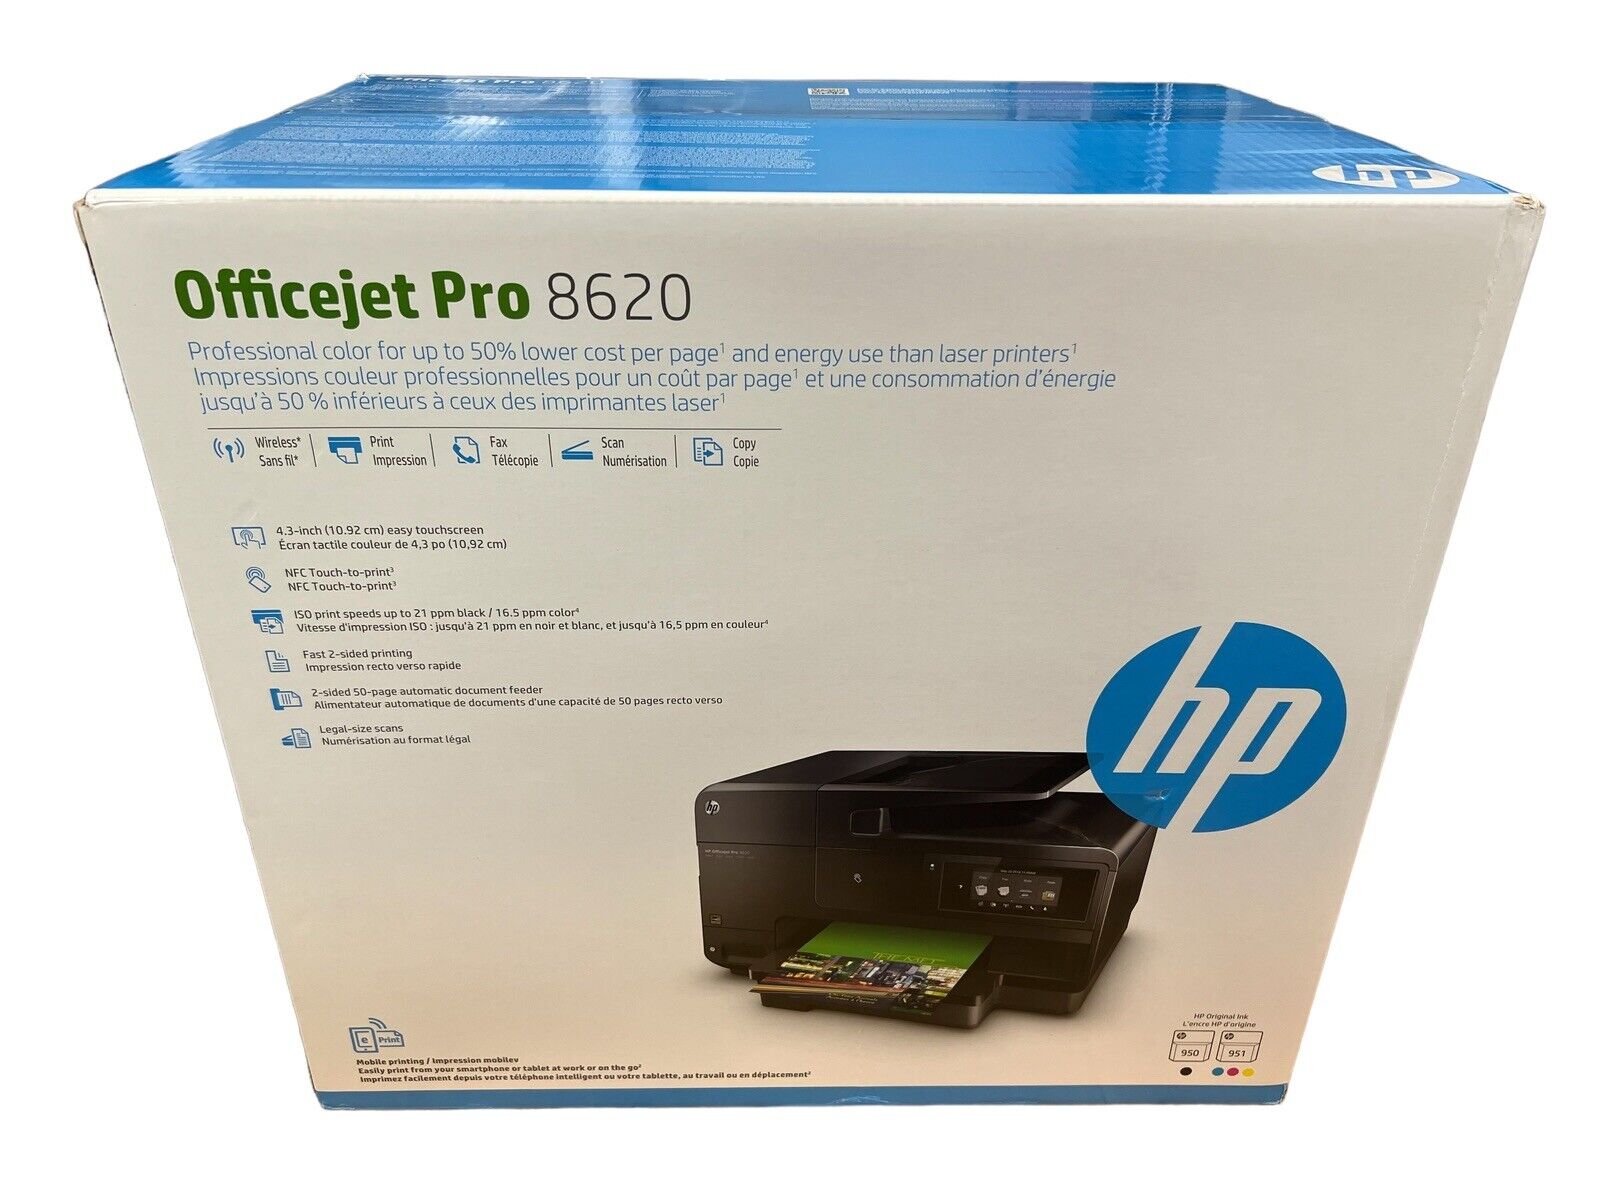 BRAND NEW - HP Officejet Pro 8620 All-In-One Inkjet Printer Factory Sealed